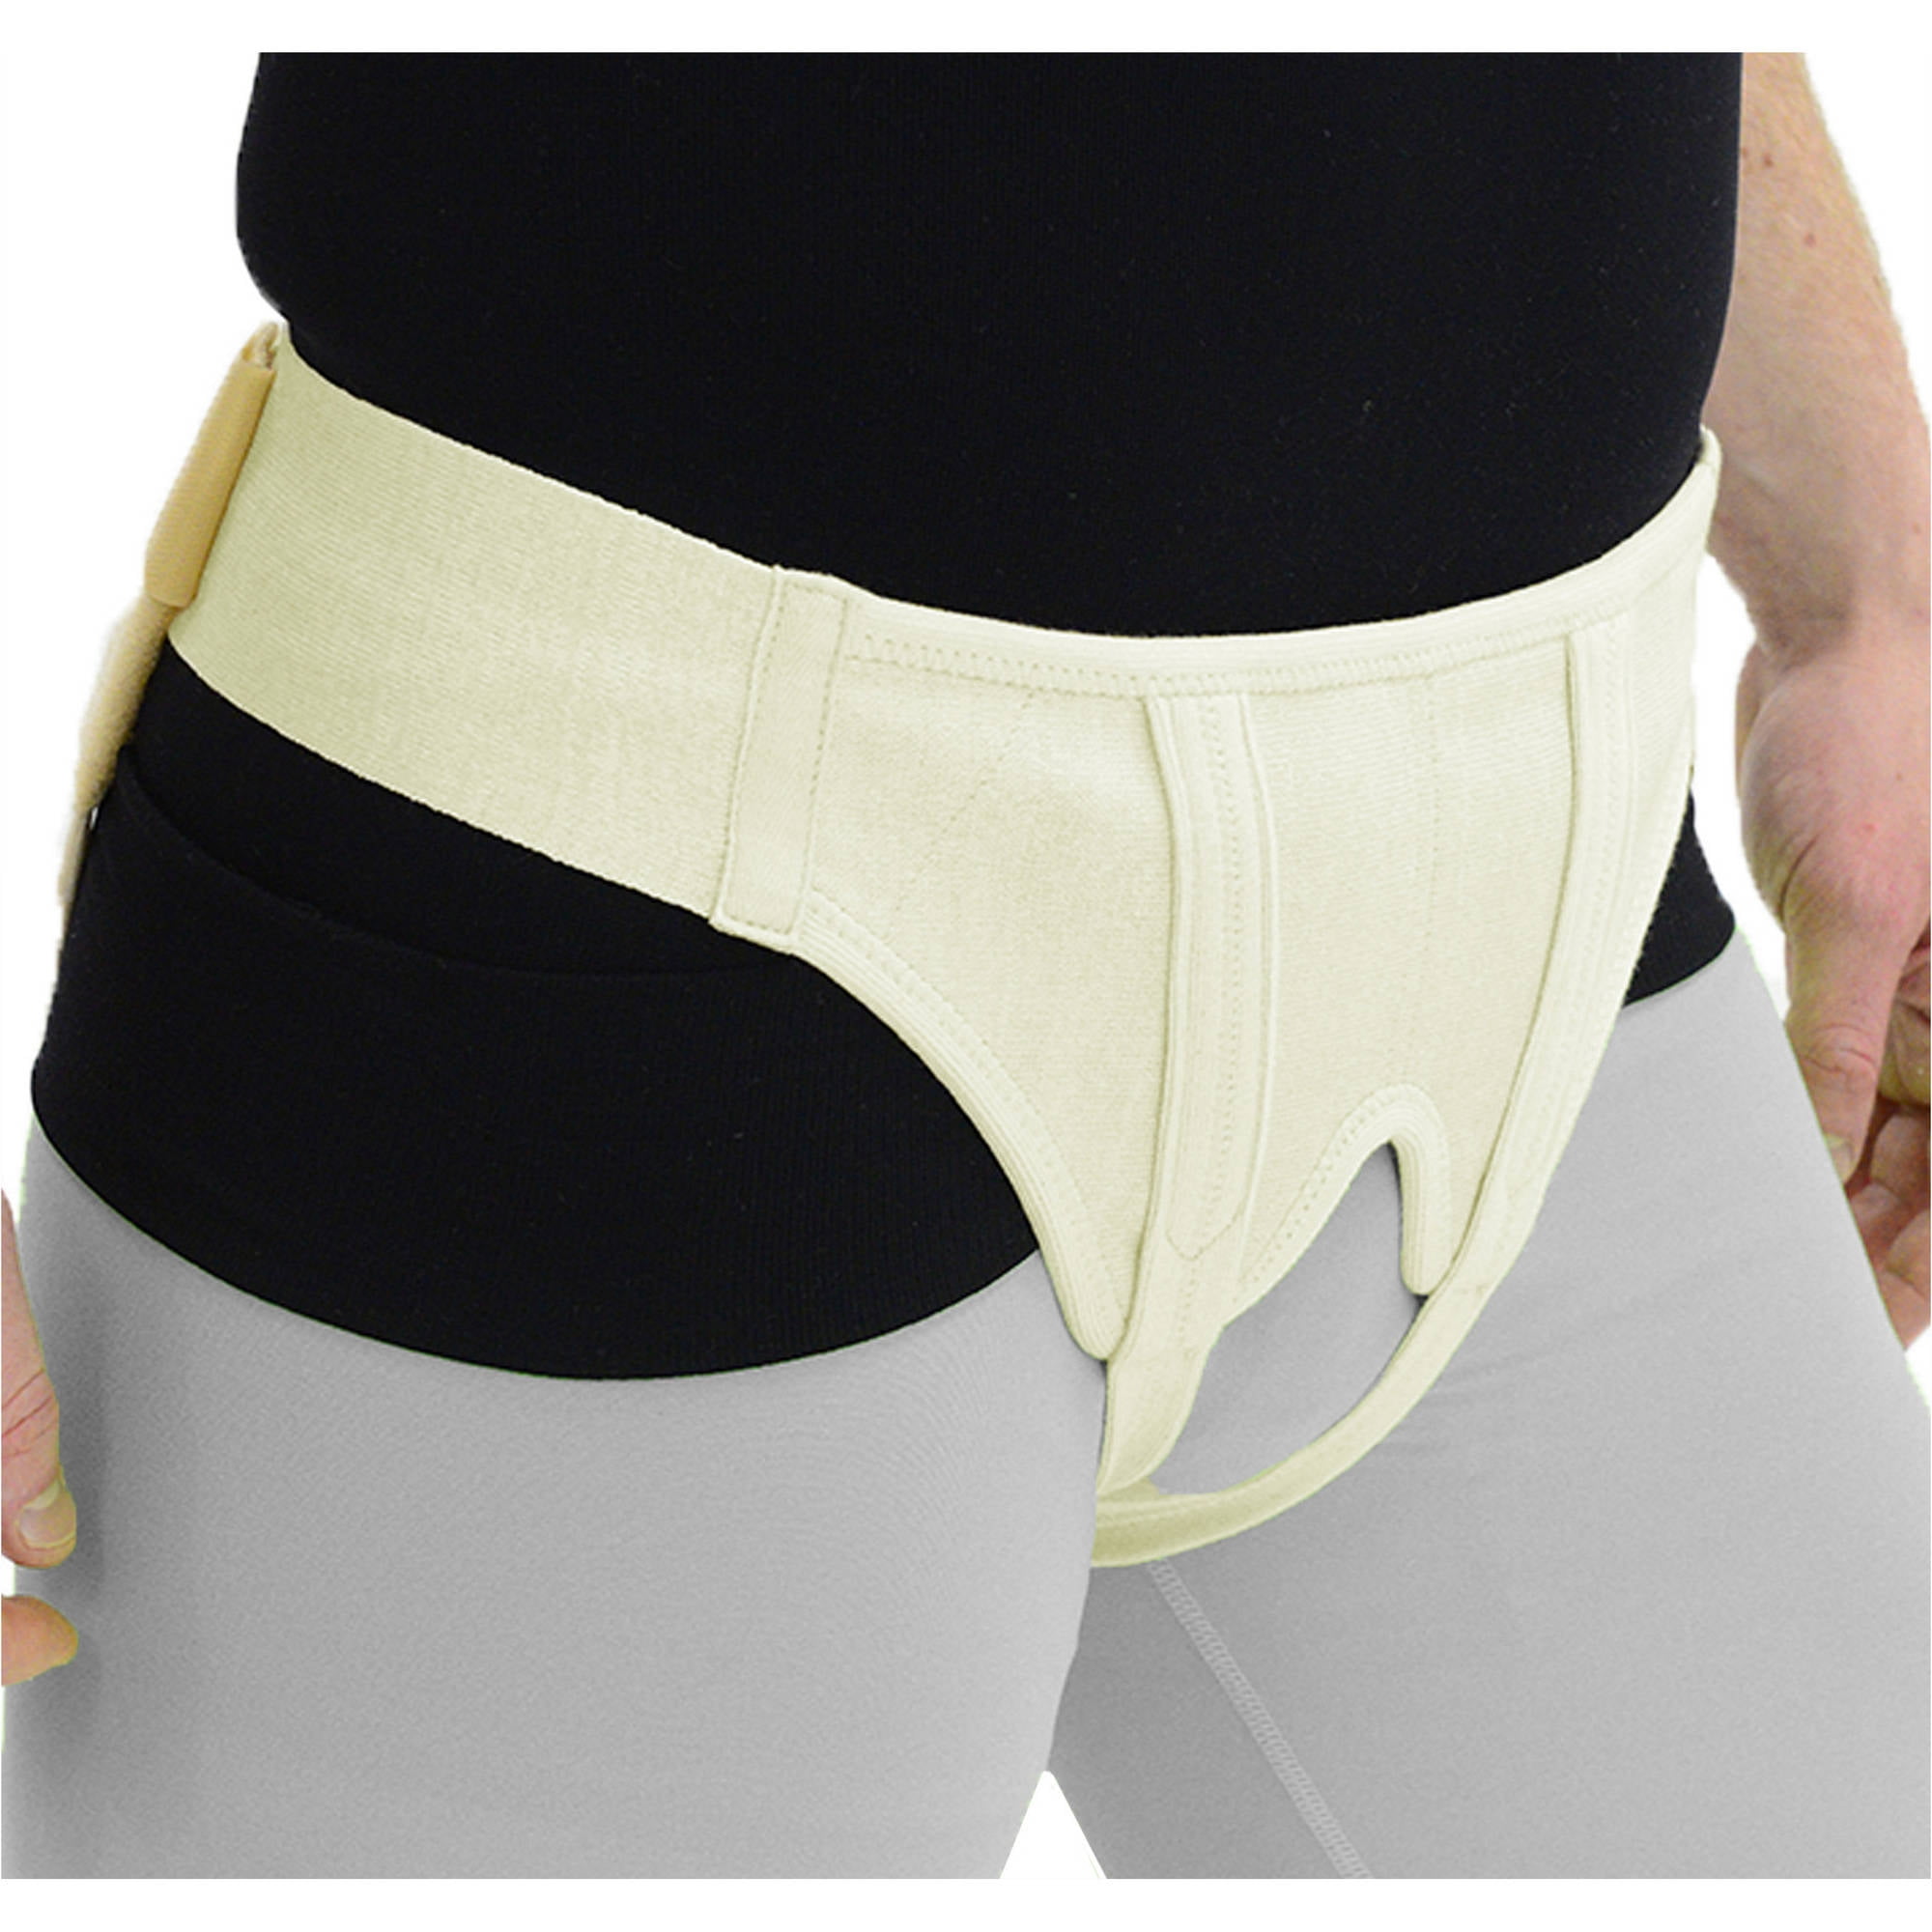  ORTONYX Umbilical Hernia Belt For Women And Men